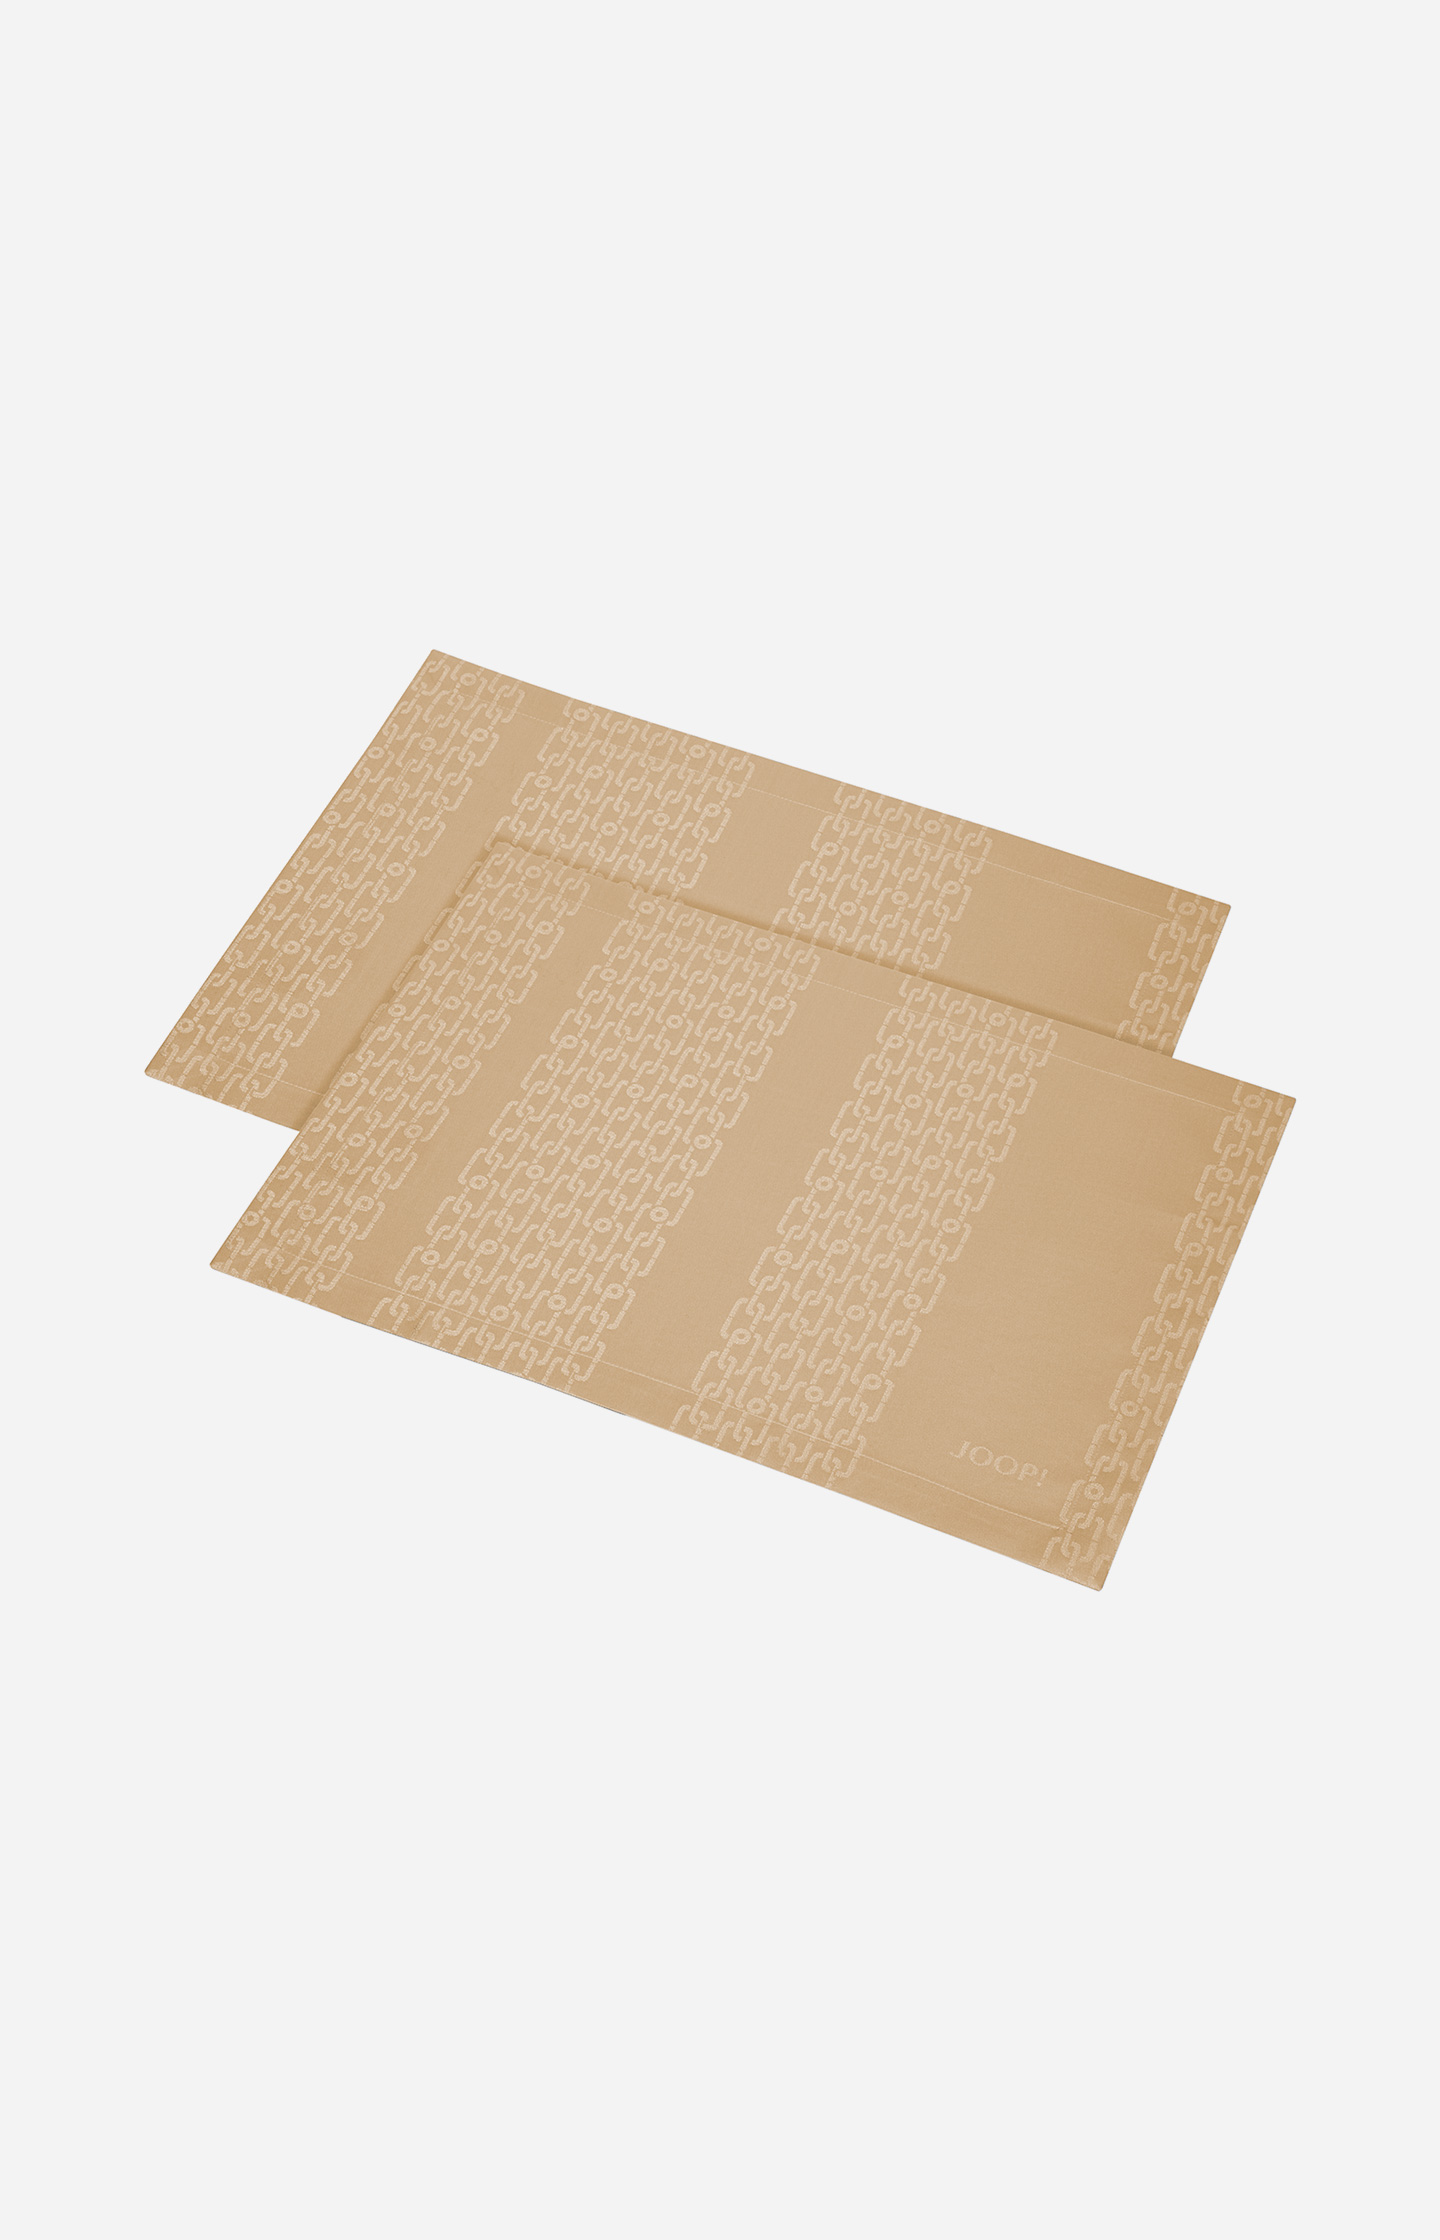 JOOP! CHAINS placemats in gold - set of 2, 36 x 48 cm - in the JOOP! Online  Shop